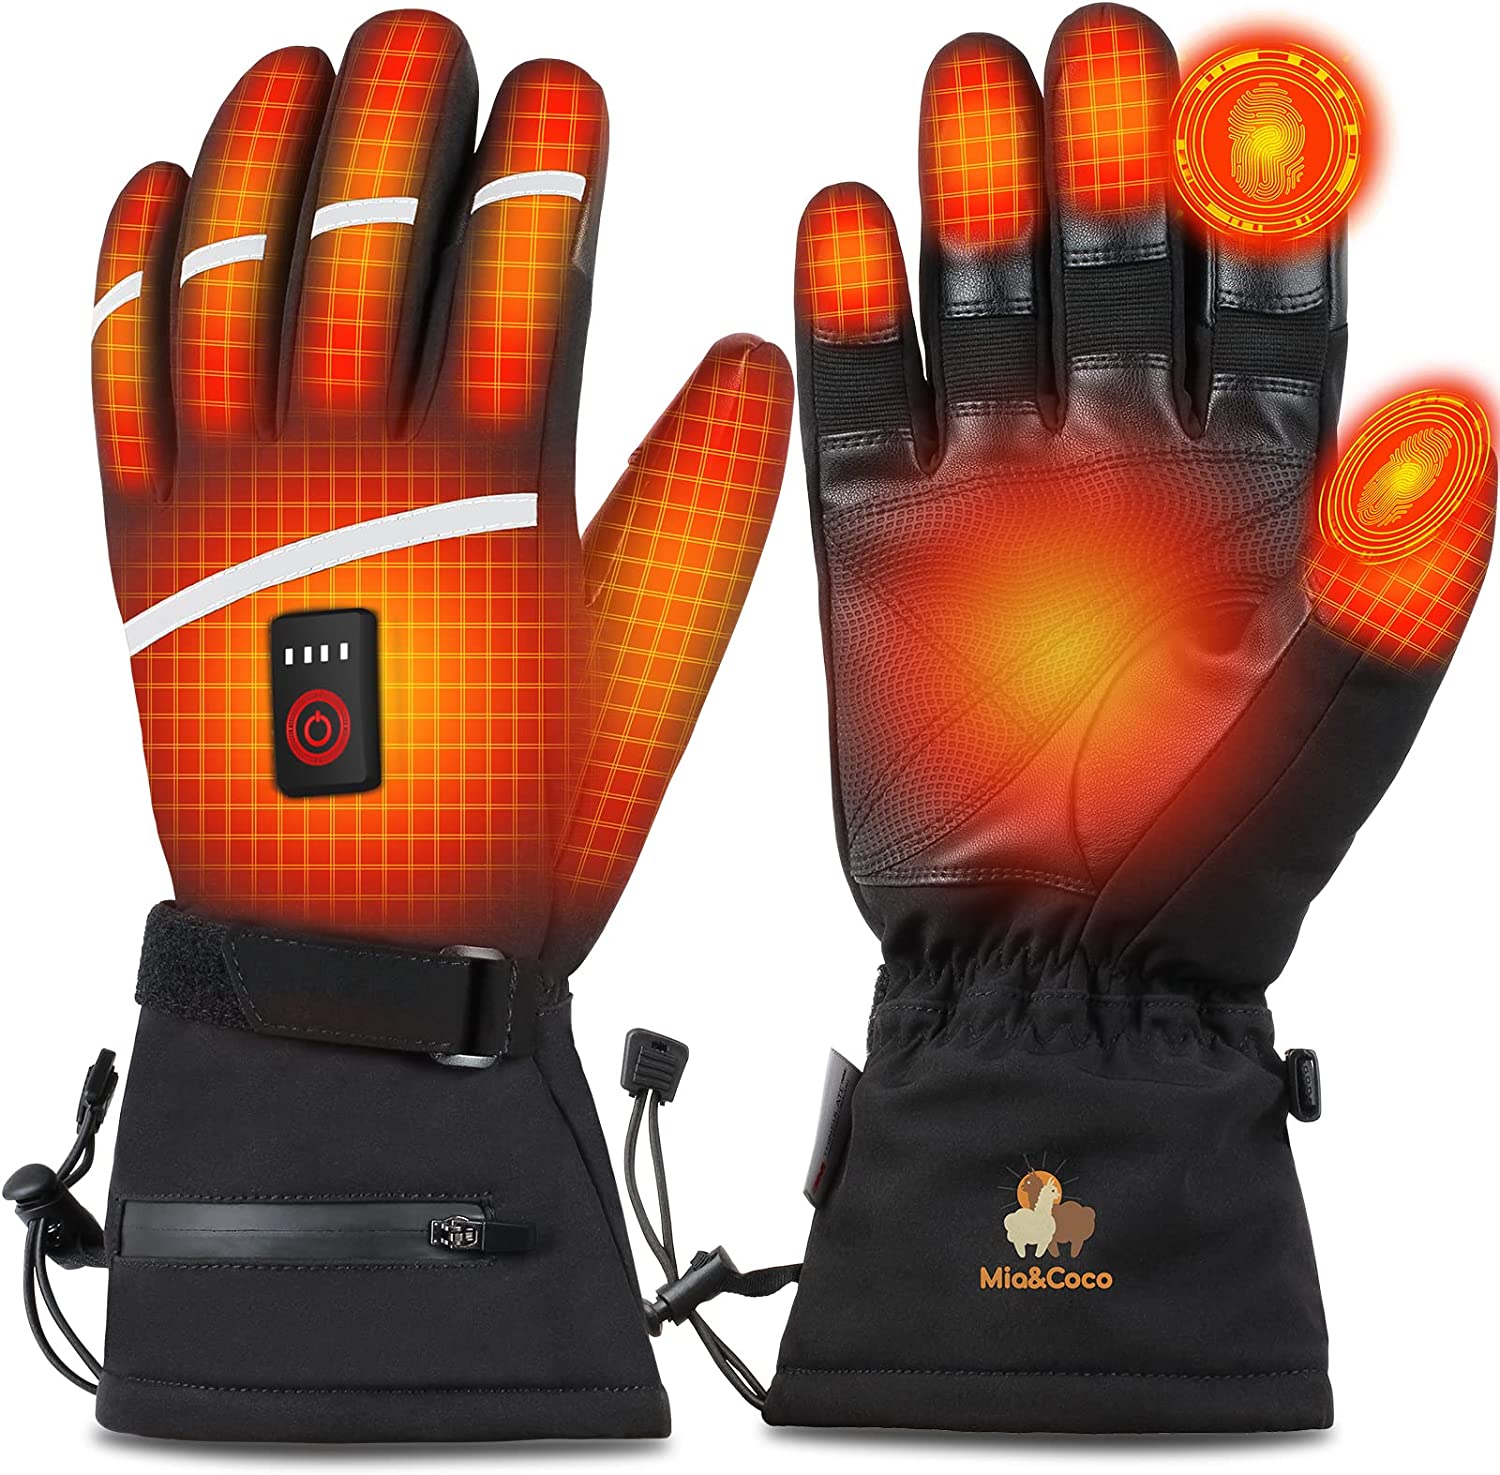 miaandcoco heated gloves